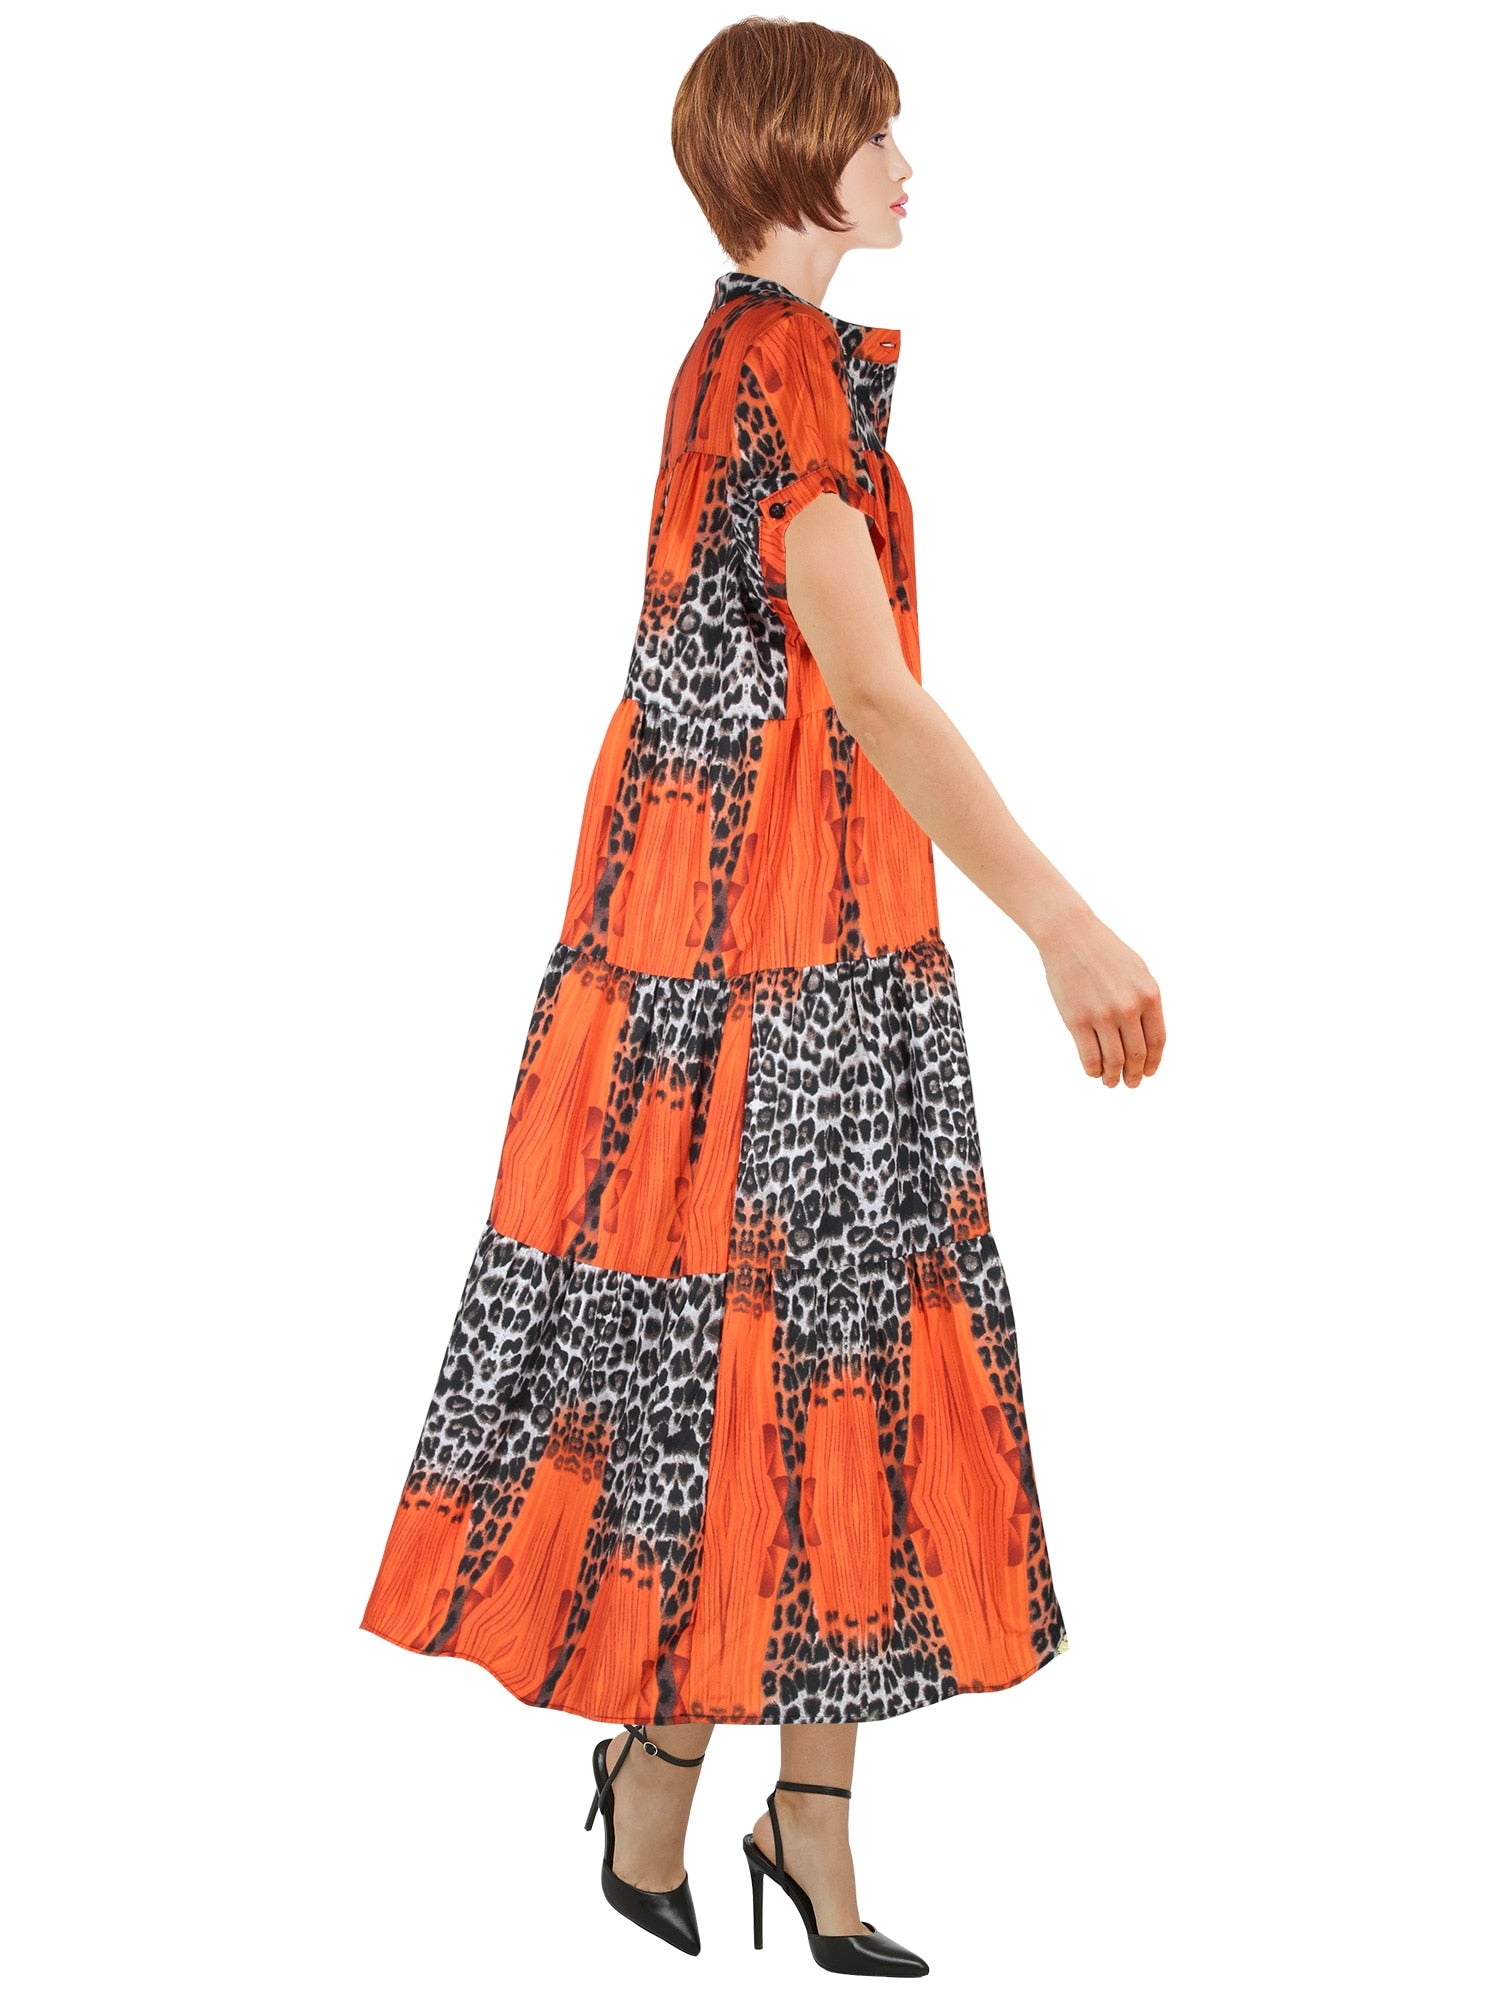 Aovica Animal Print Leopard A-Line Dress Women's Patchwork Mandarin Collar Short Sleeve Female Shirt Dress Big Hem